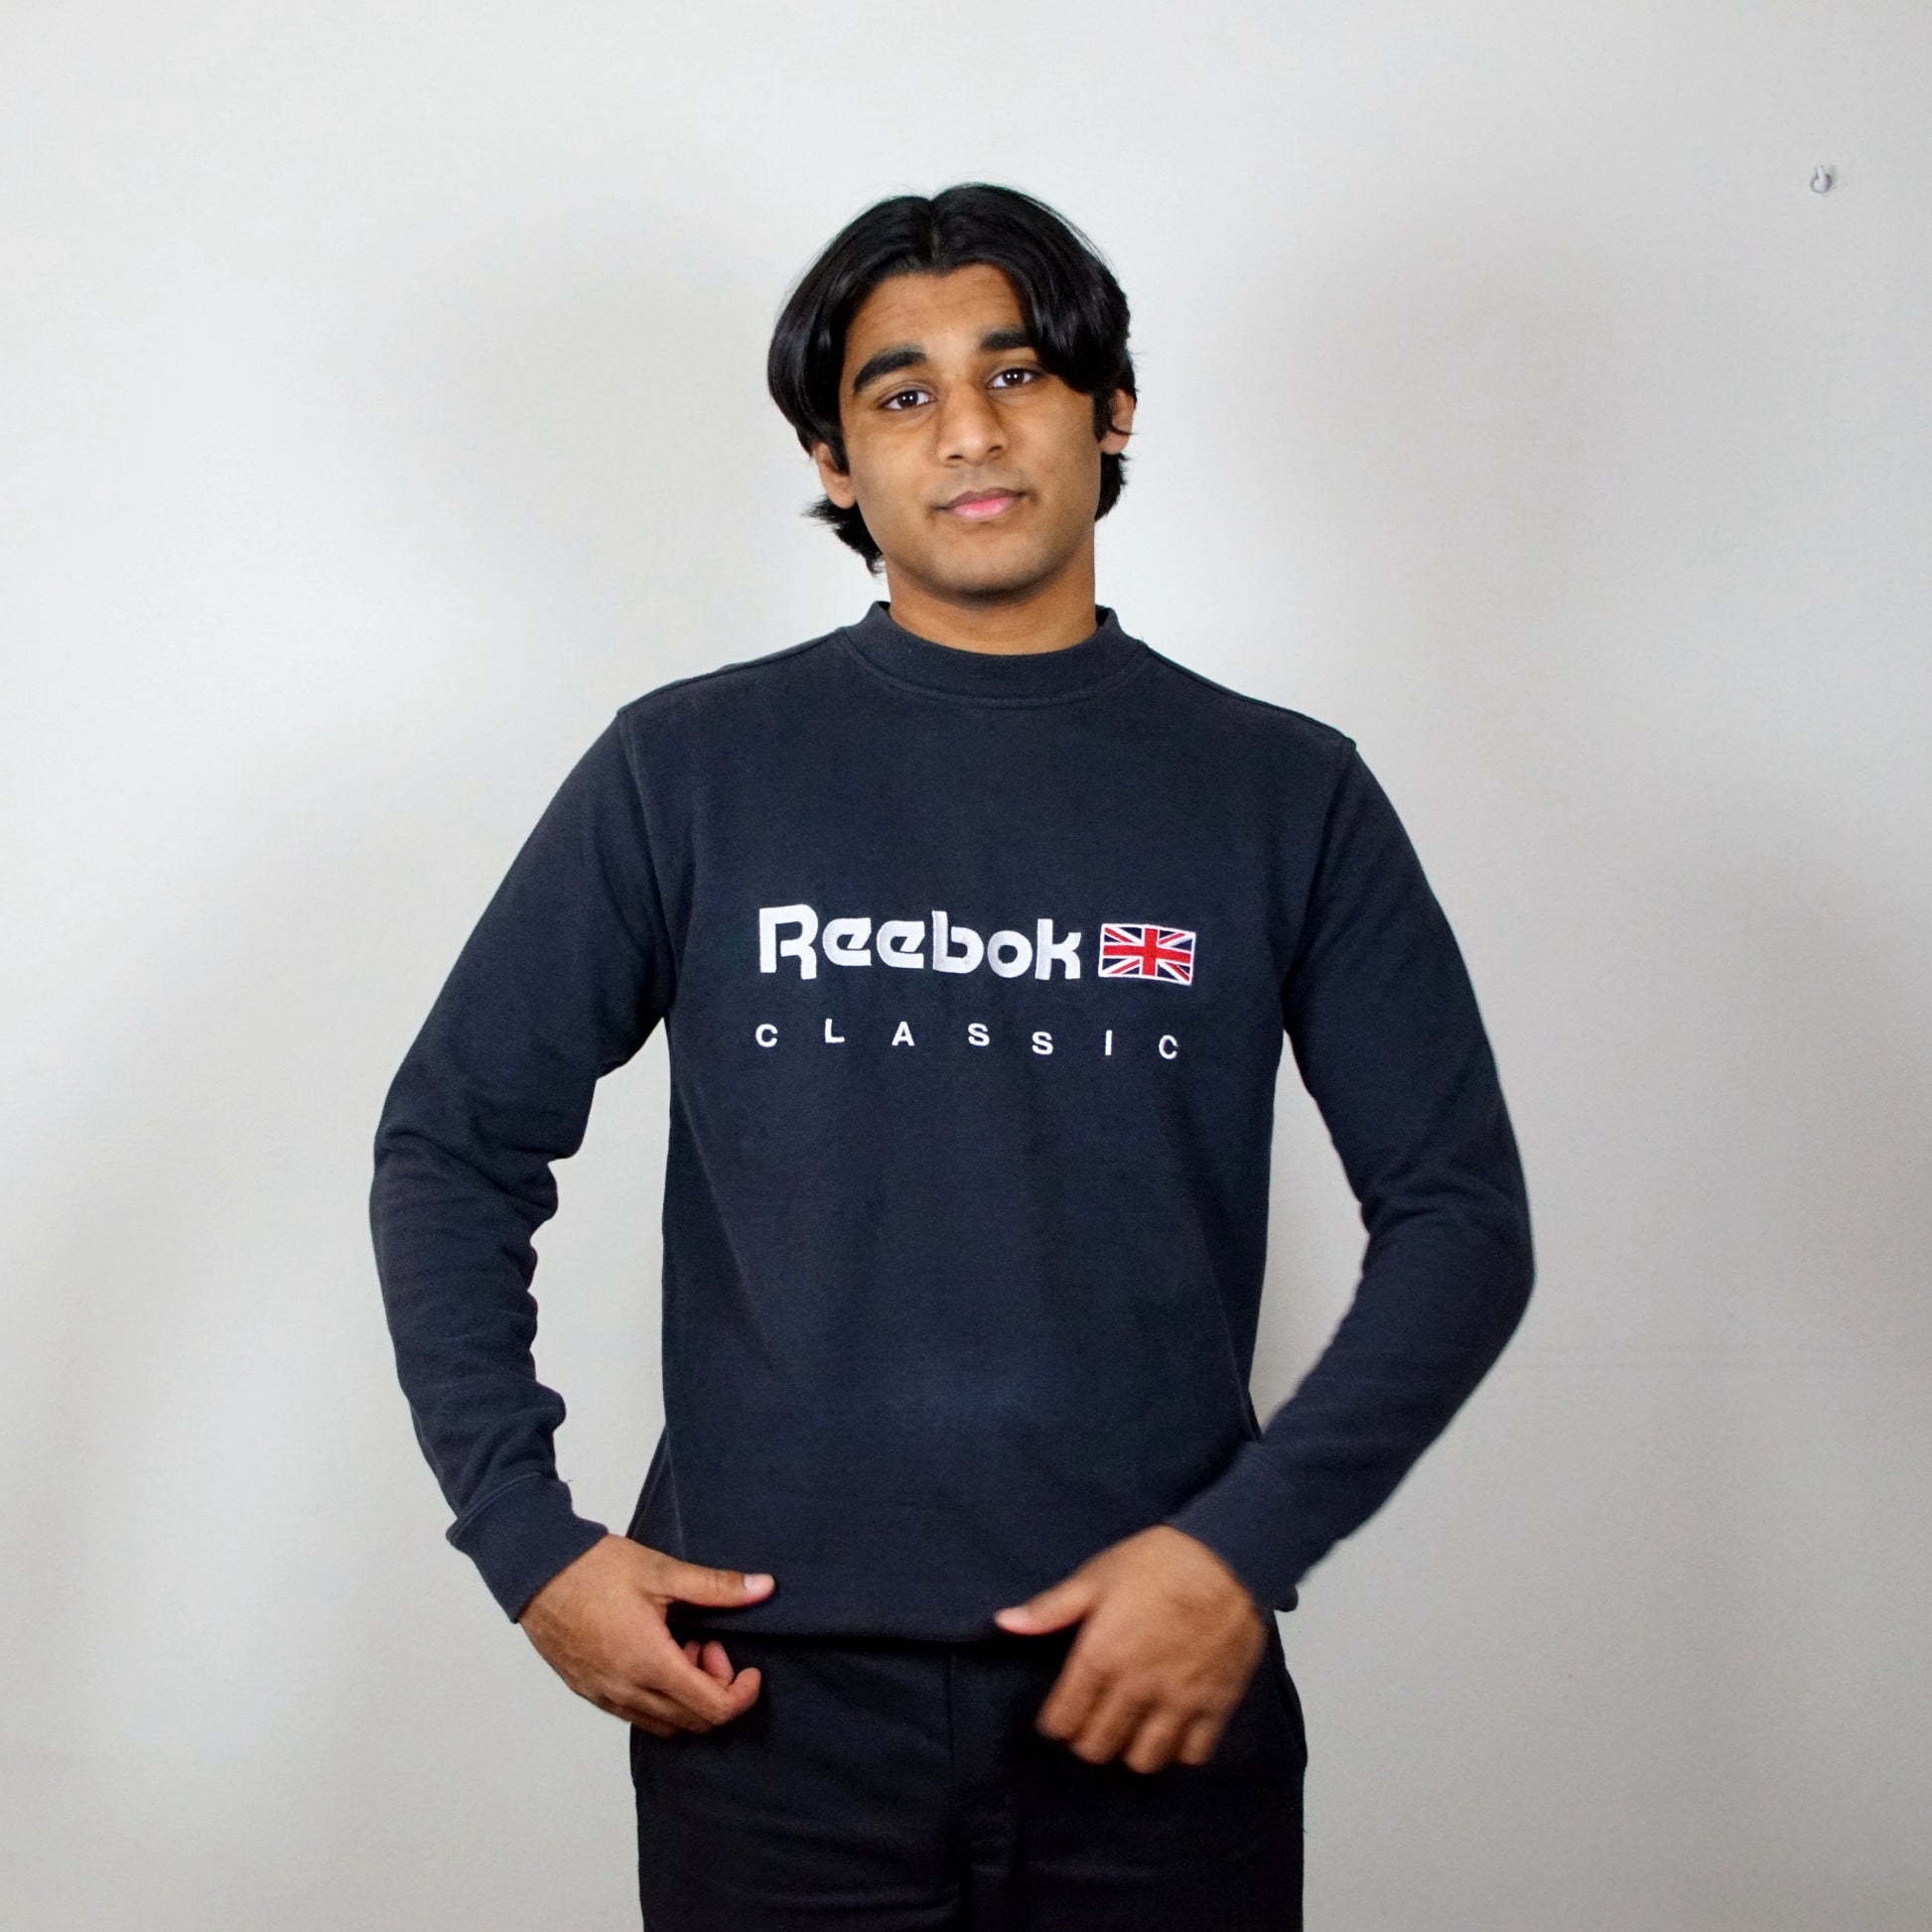 Reebok Classic Sweatshirt Dadscloset.dk